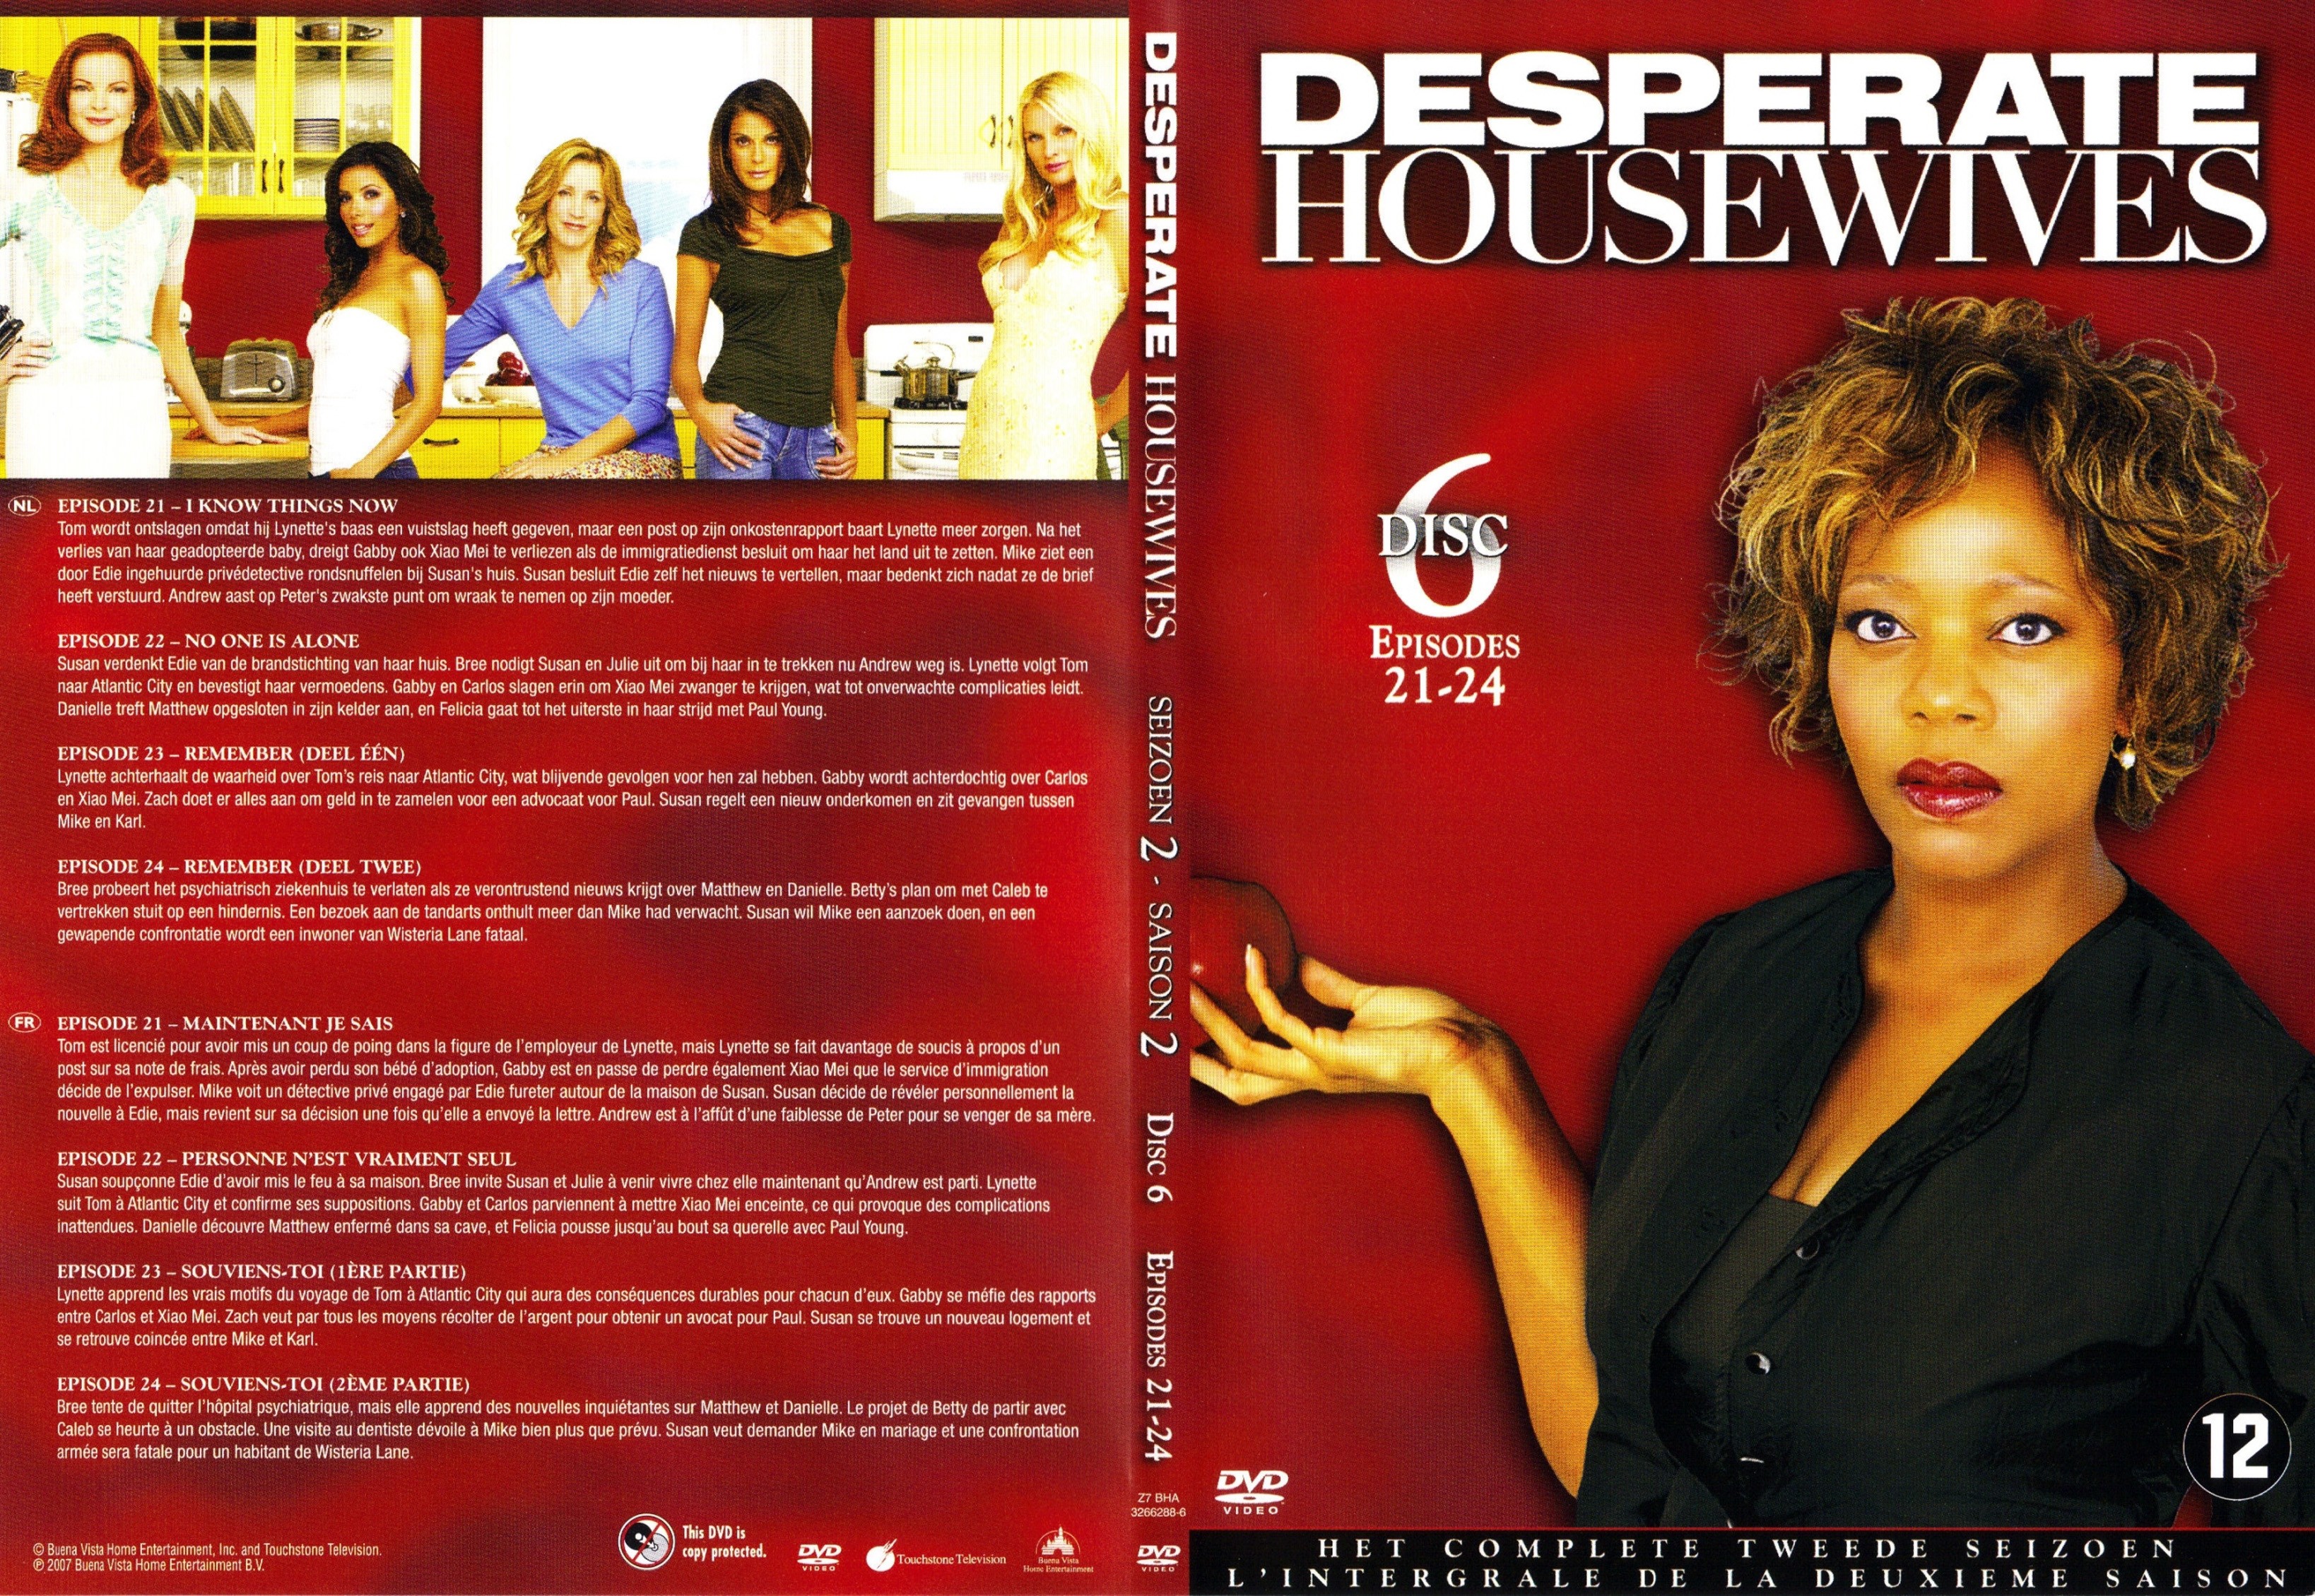 Jaquette DVD Desperate Housewives saison 2 DVD 6